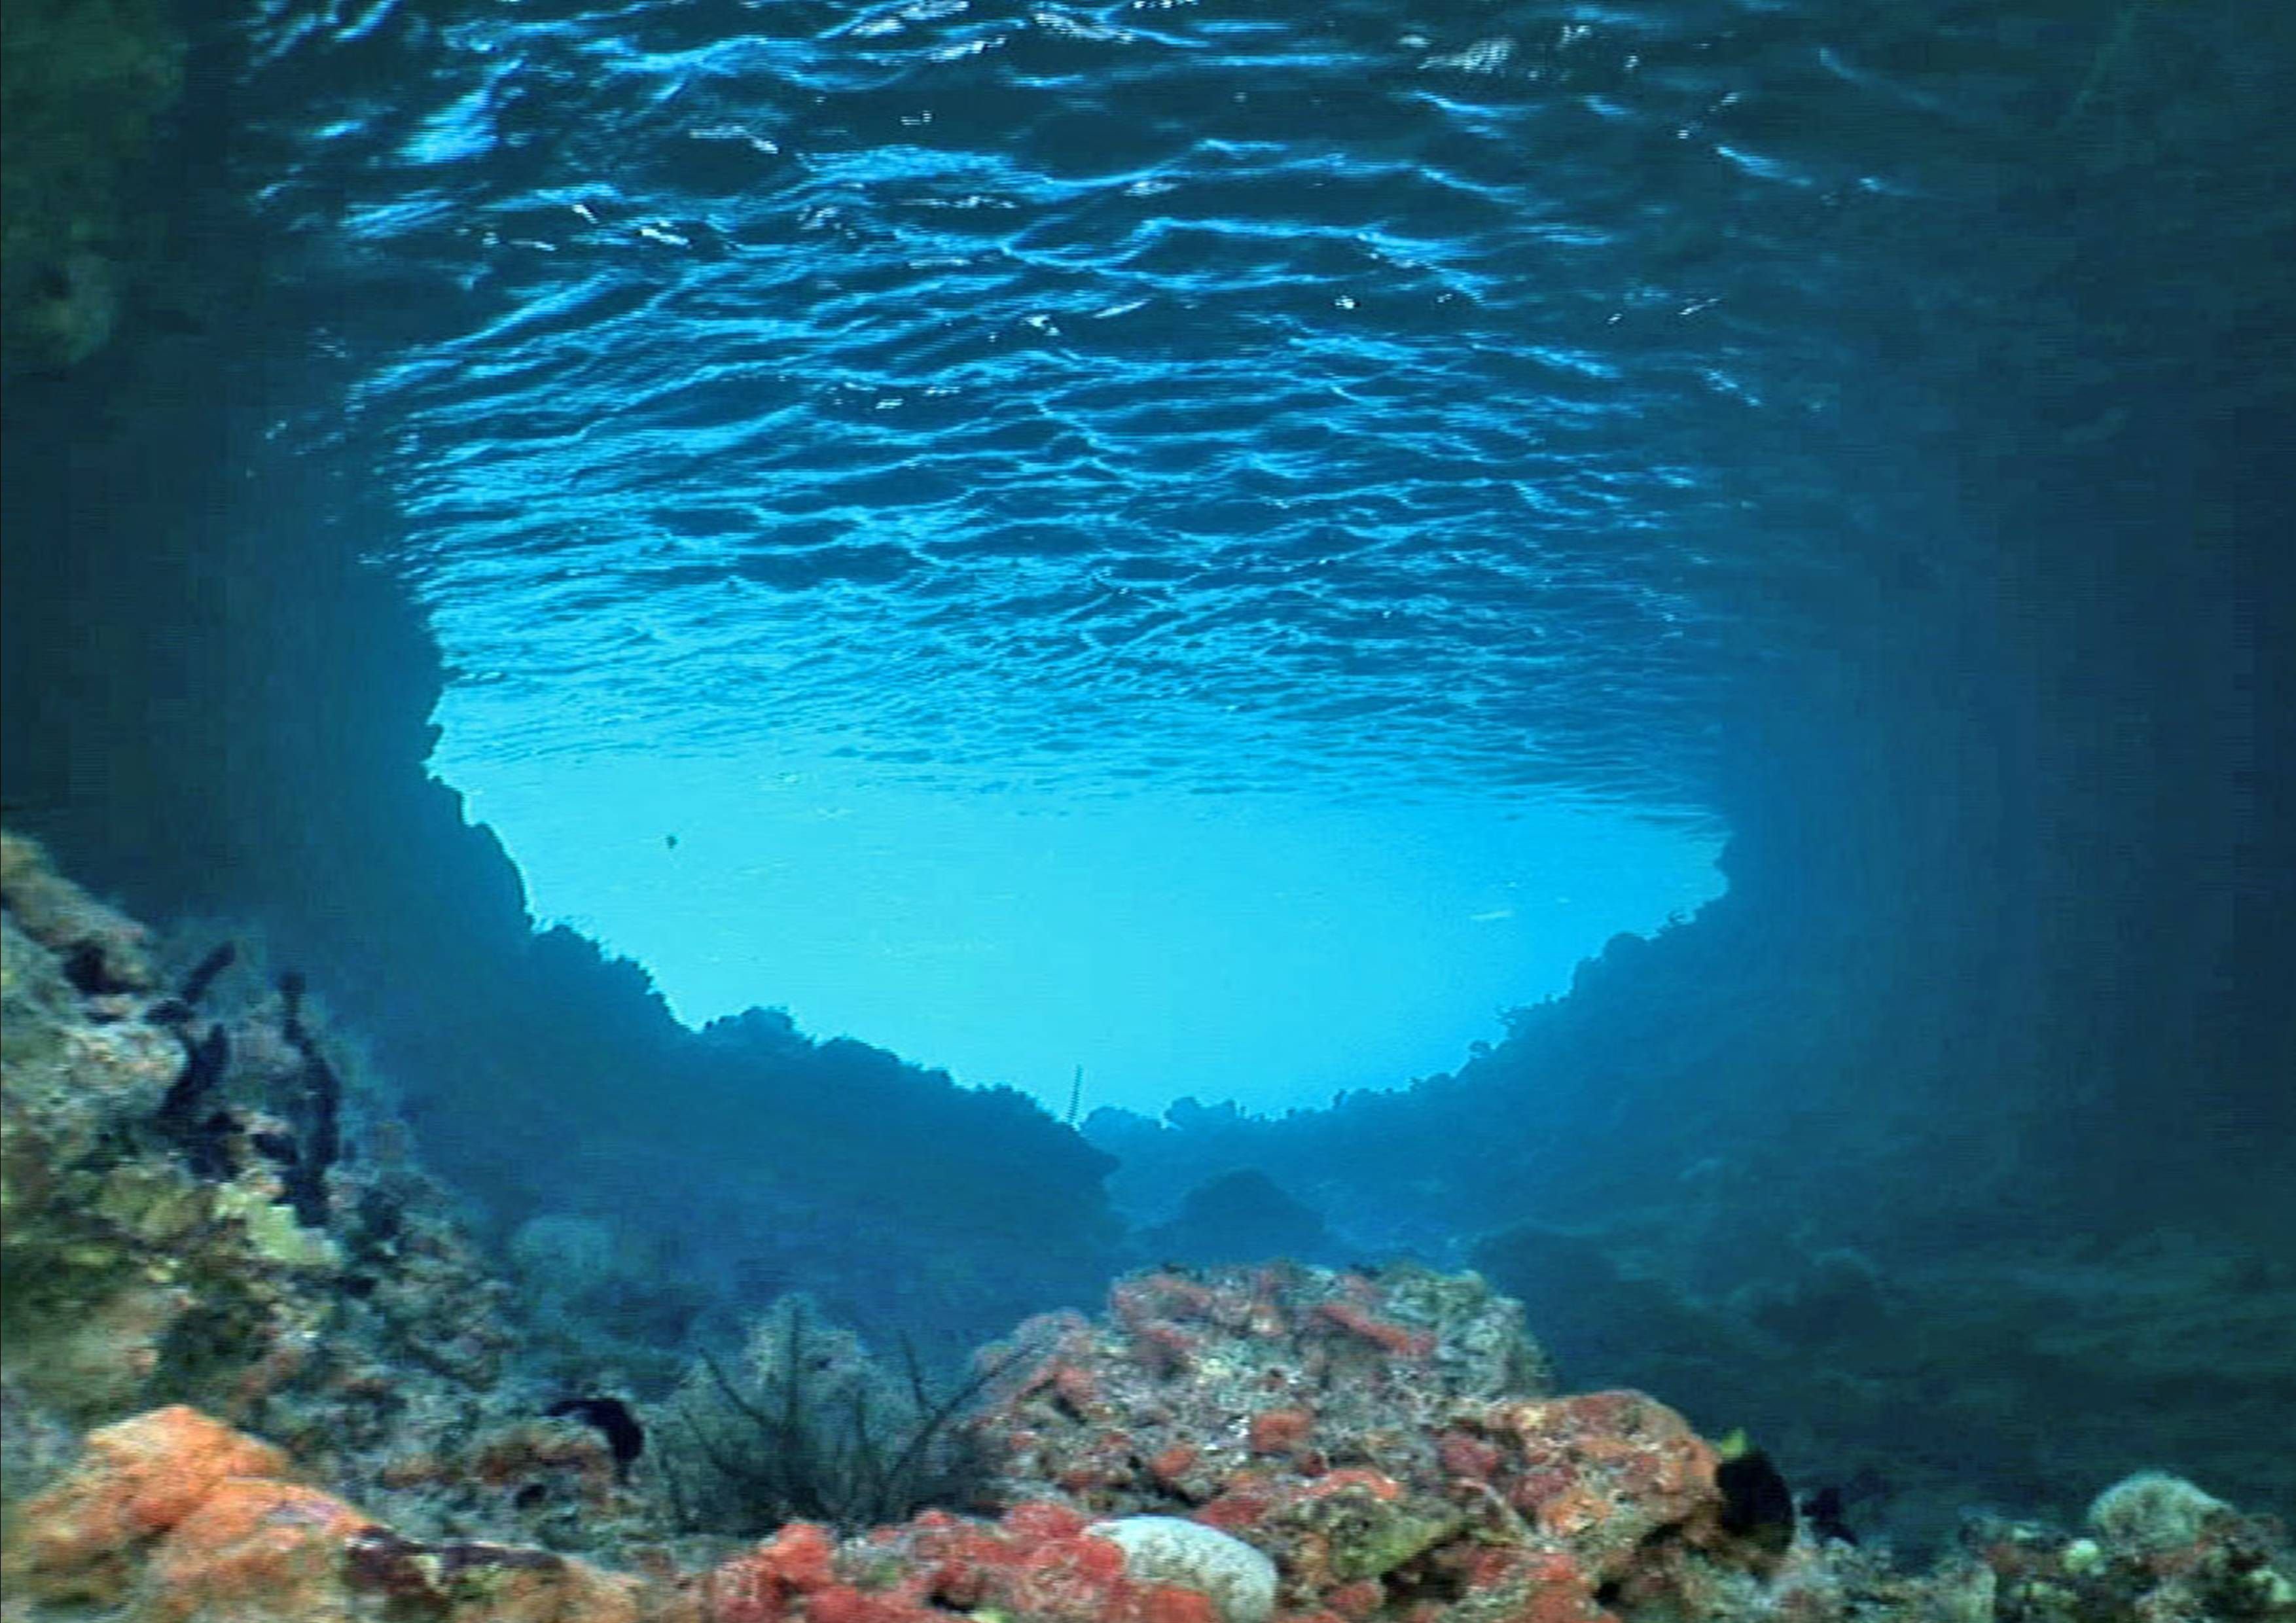 Картинка на дне моря. Ущелье Силфра, Исландия. Дно моря. Дно океана. Море под водой.